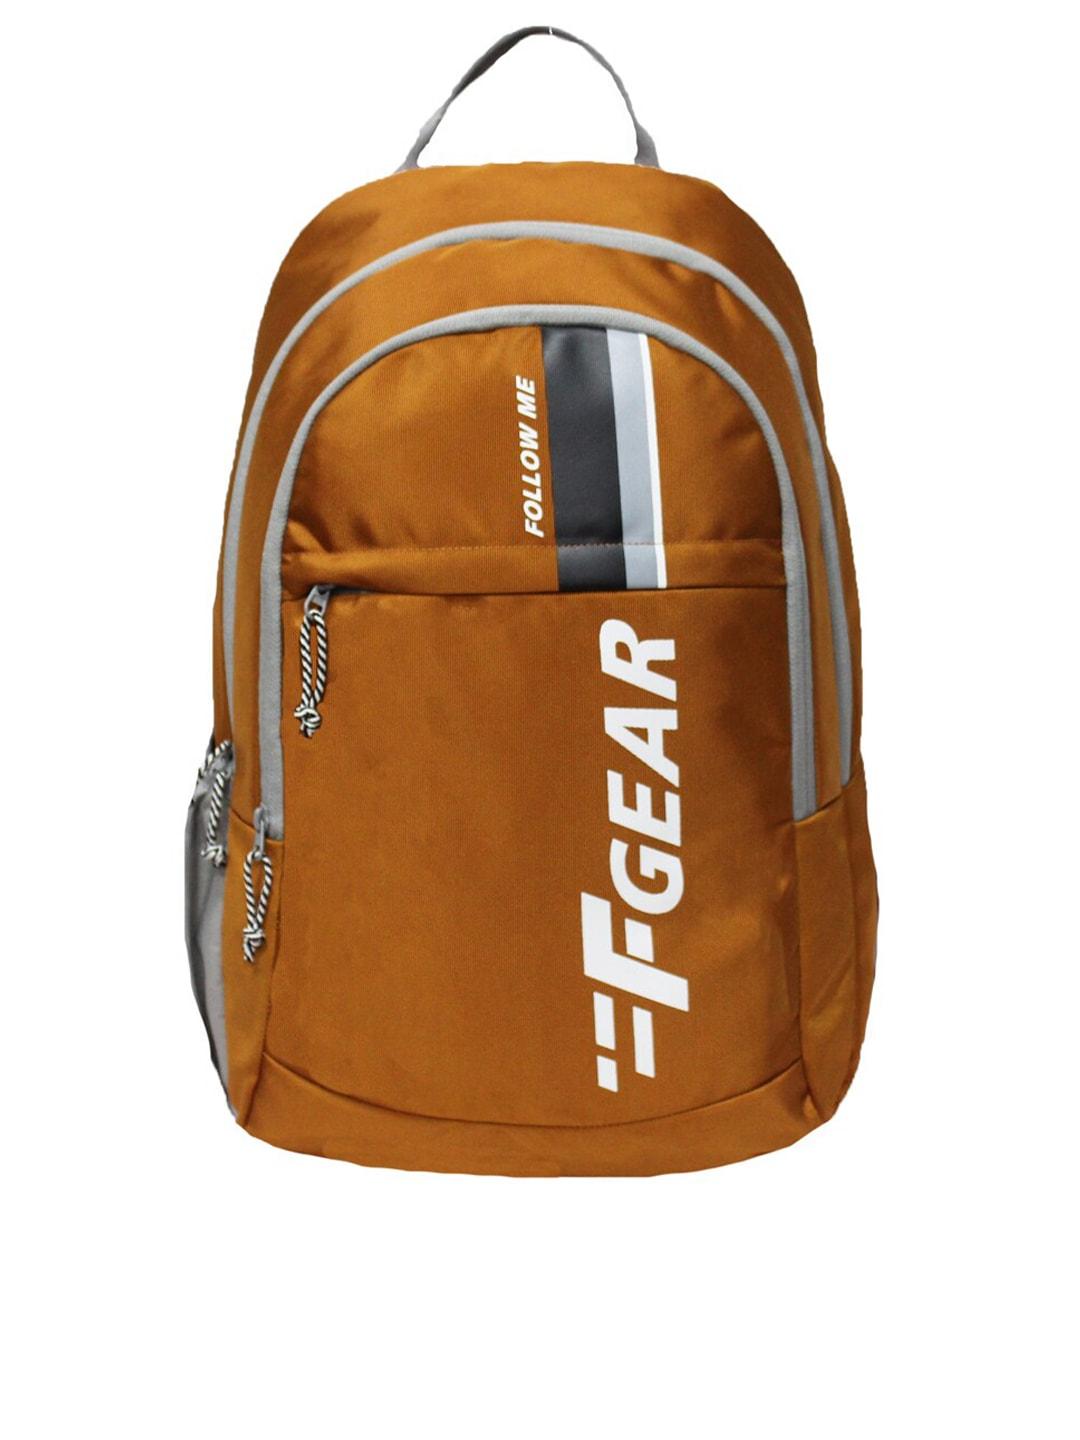 f gear unisex mustard & grey backpack